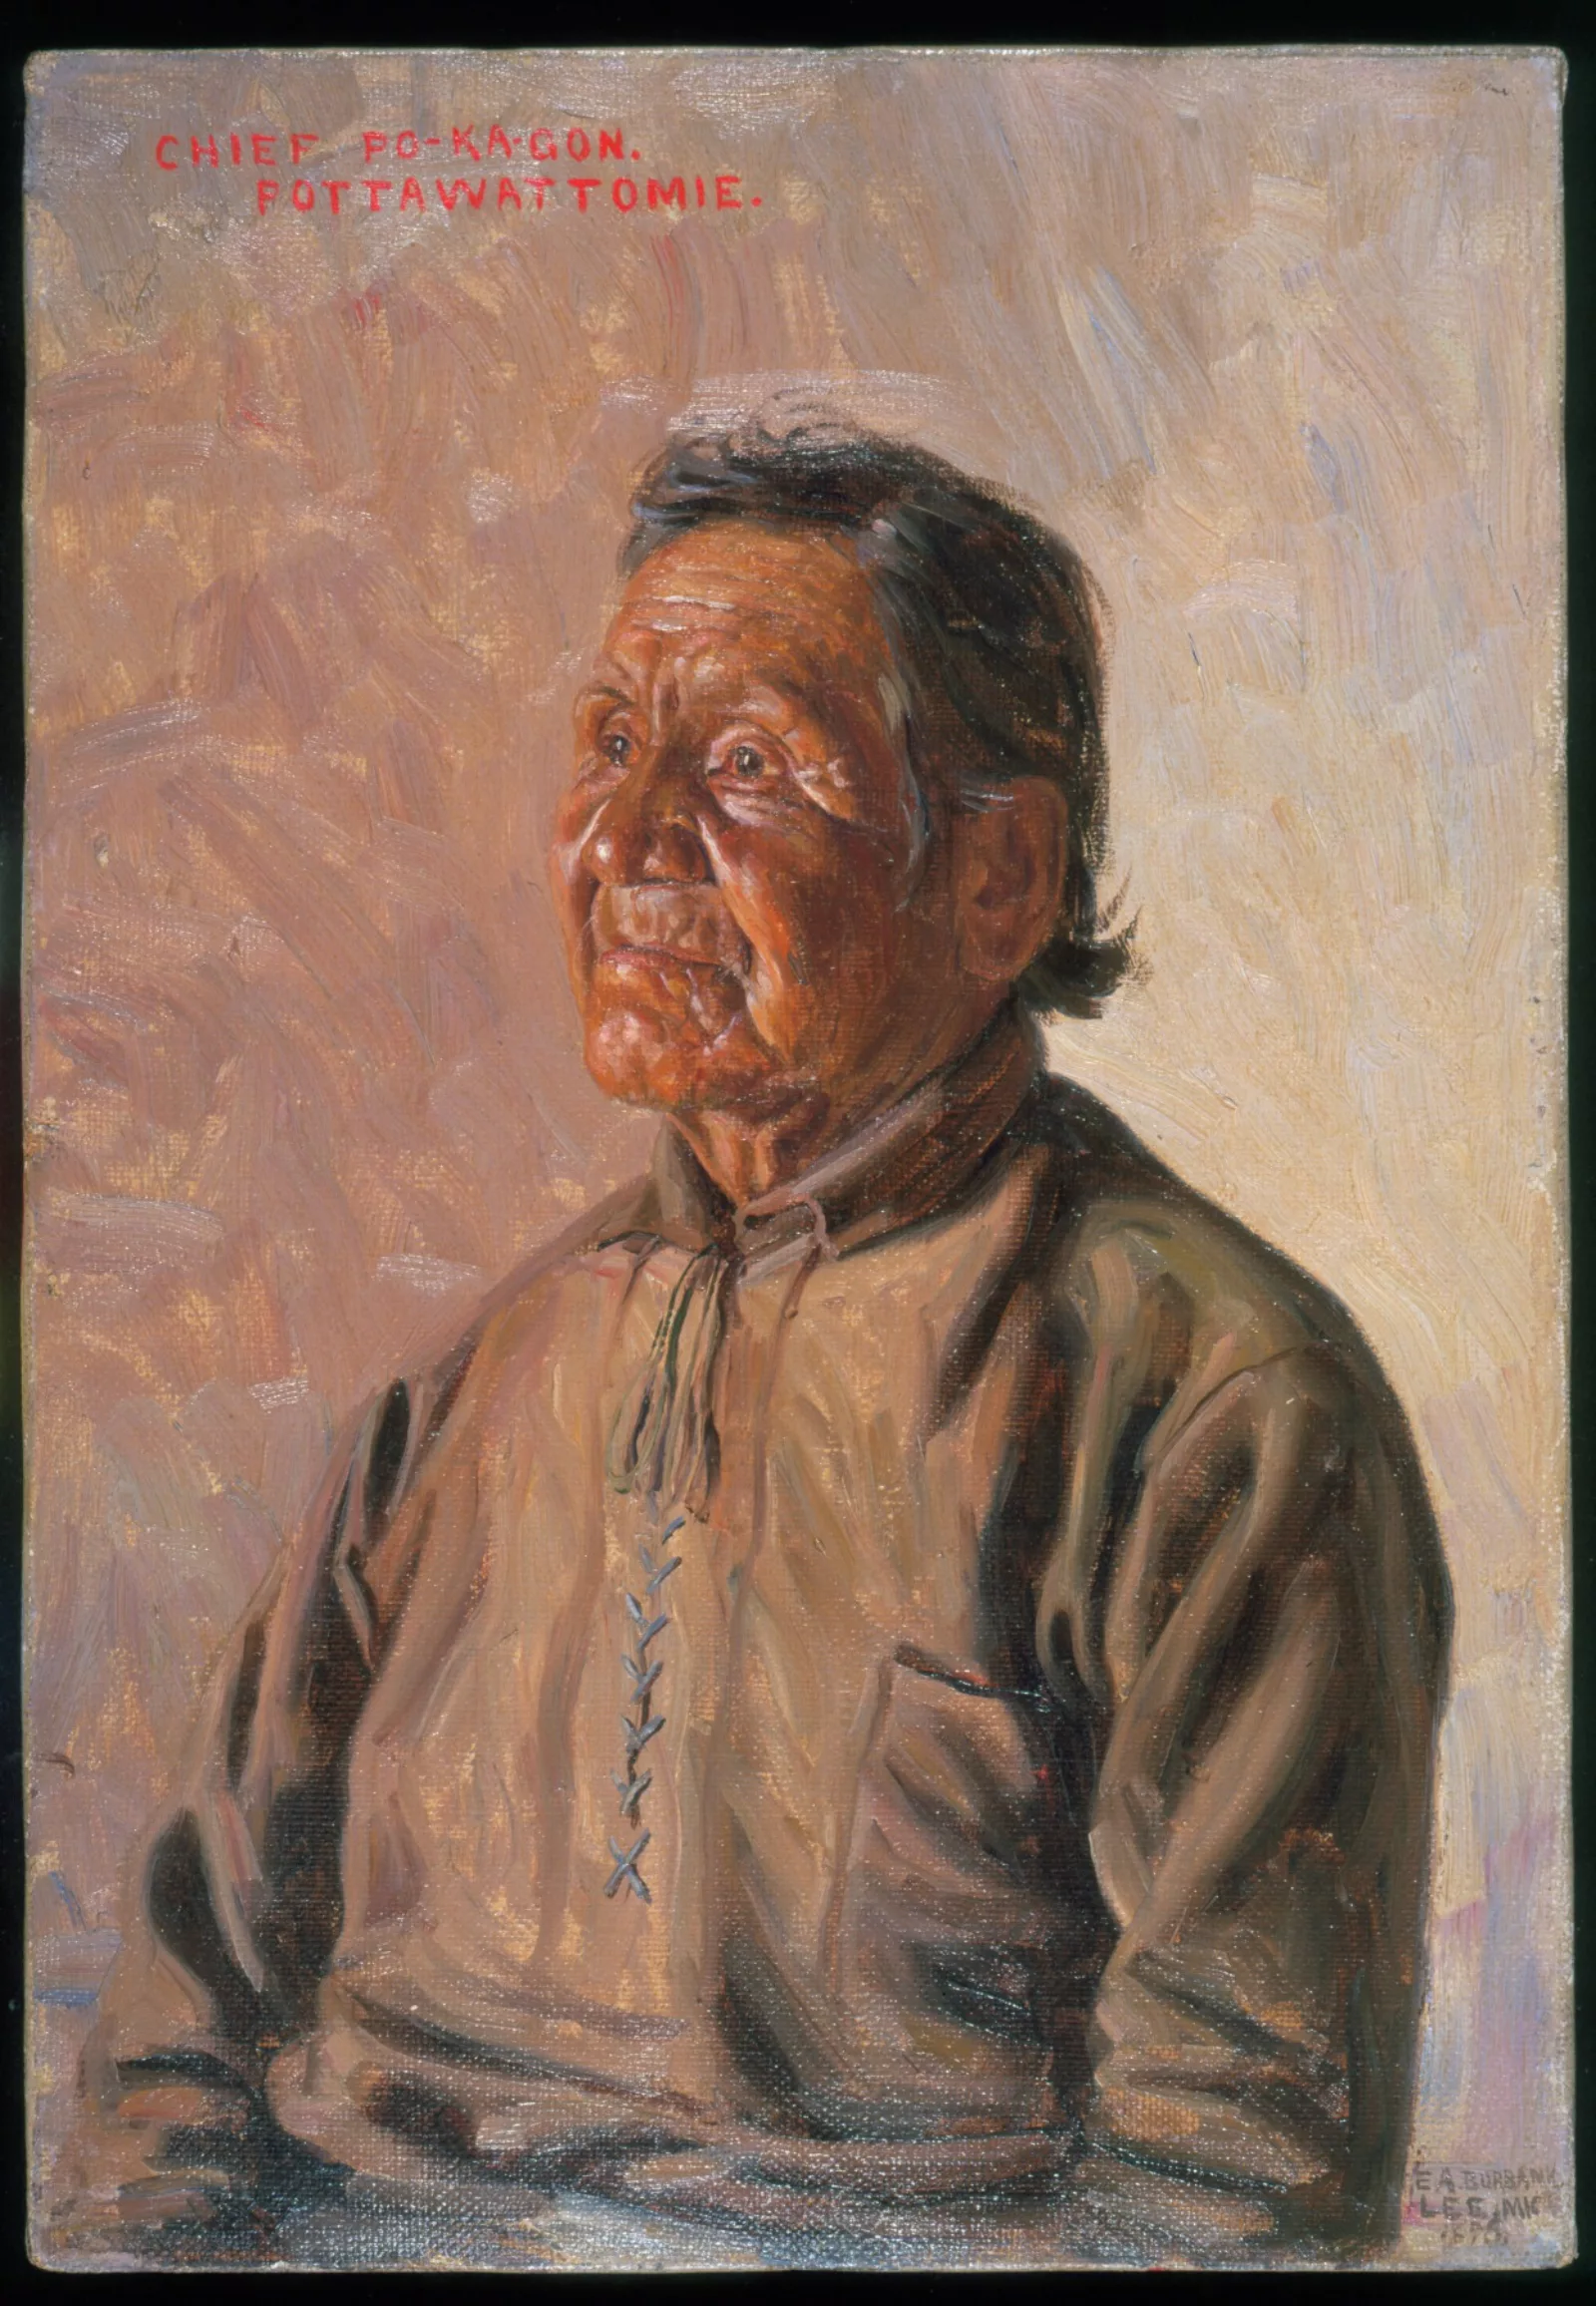 Portrait of Simon Pokagon. The words "Chief Po-Ka-Gon Pottawattomie" appear over his head